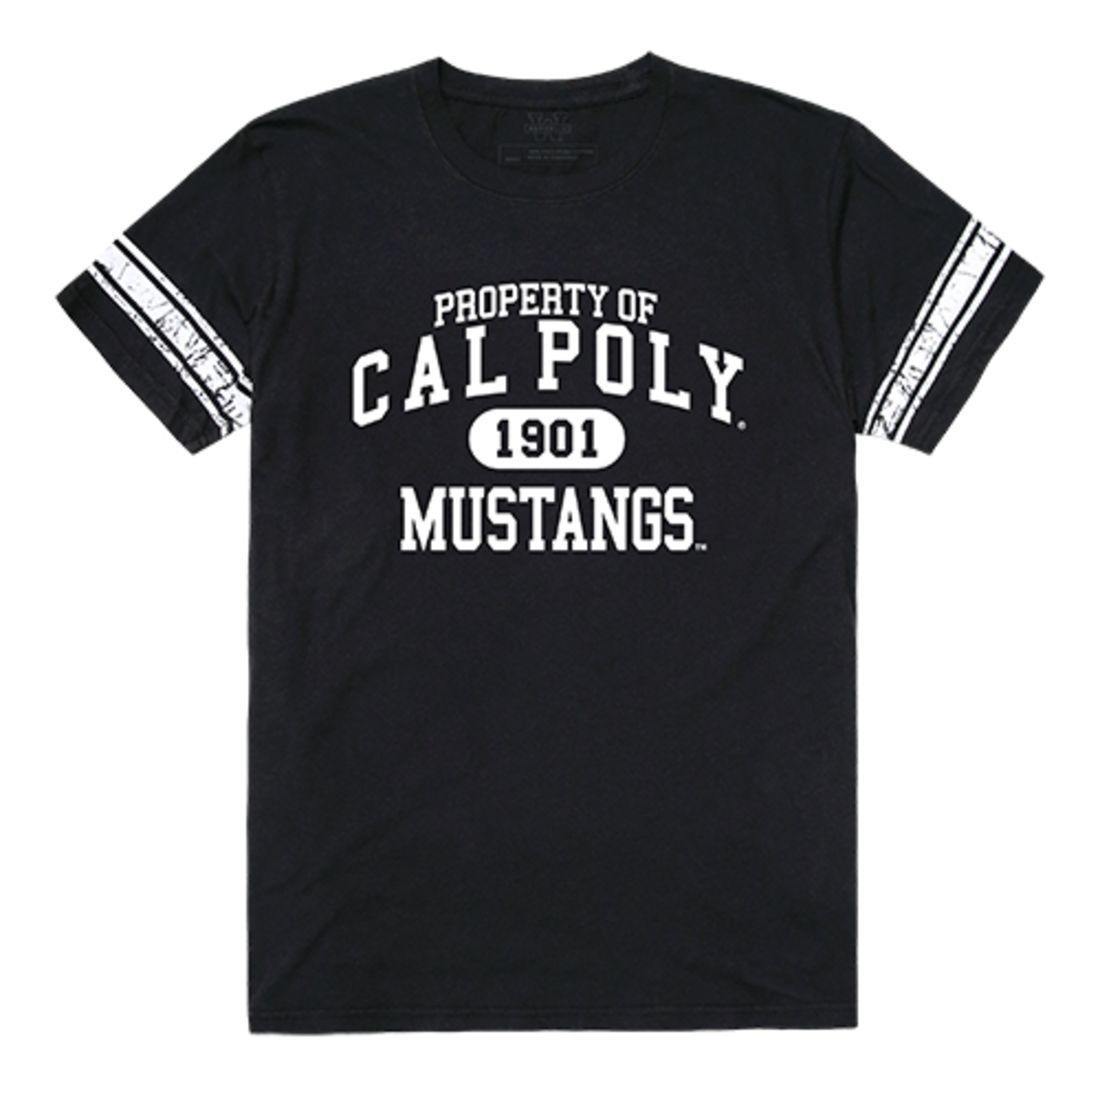 Cal Poly California Polytechnic State University Mustangs Property T-Shirt Black-Campus-Wardrobe